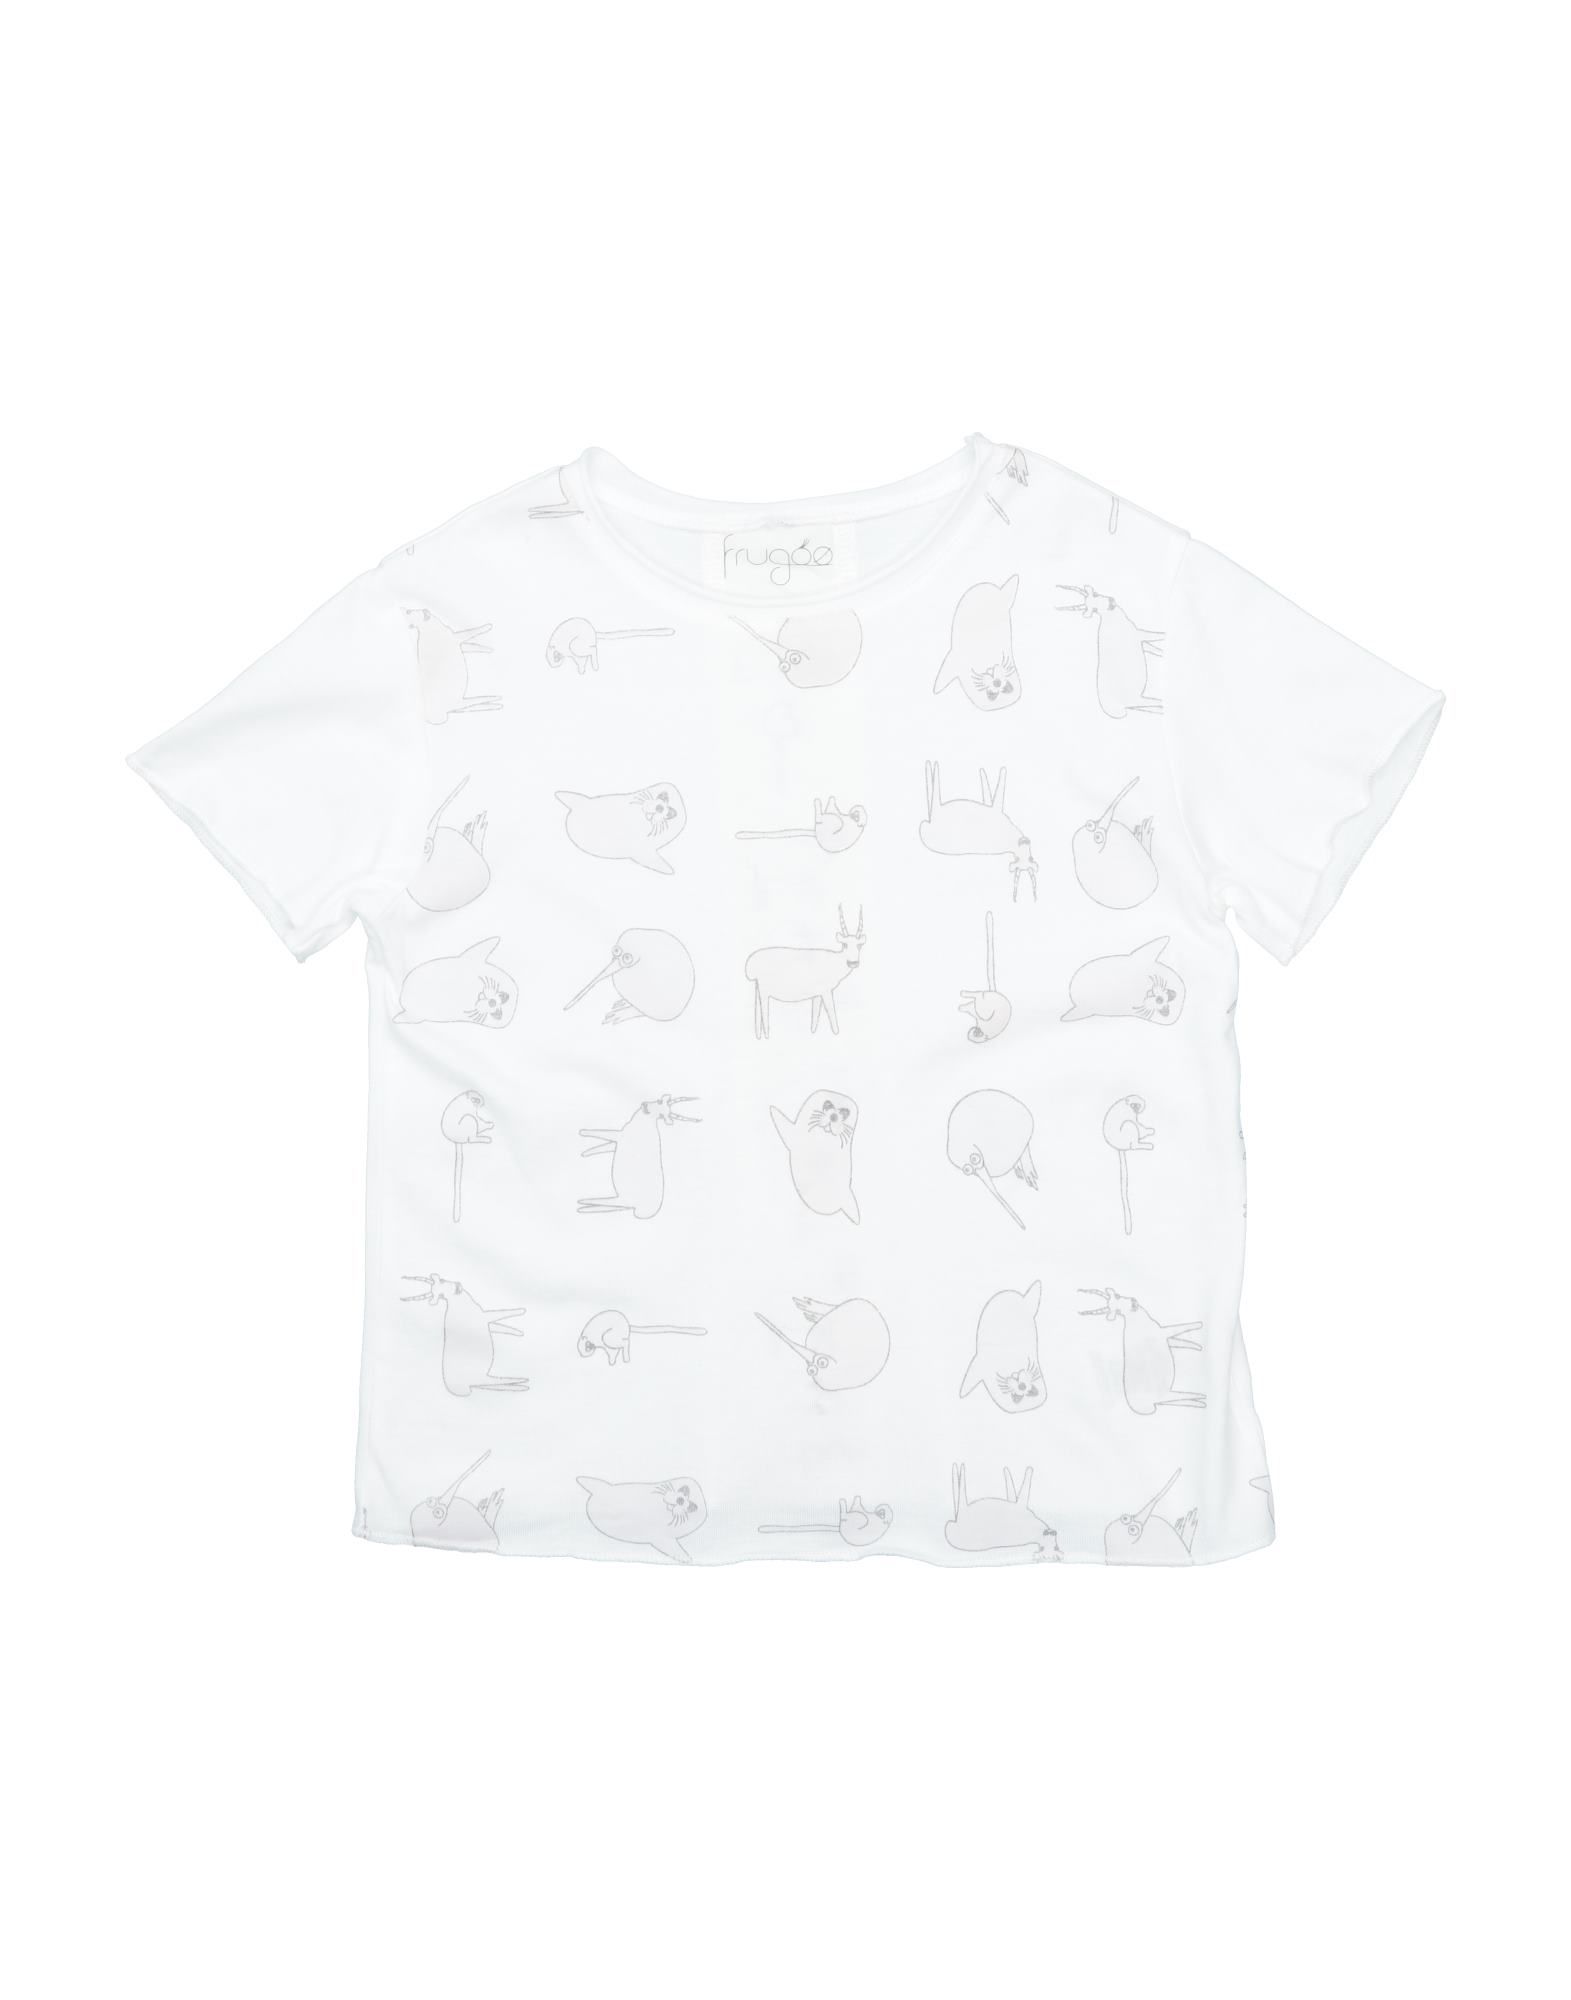 Frugoo Kids' T-shirts In White